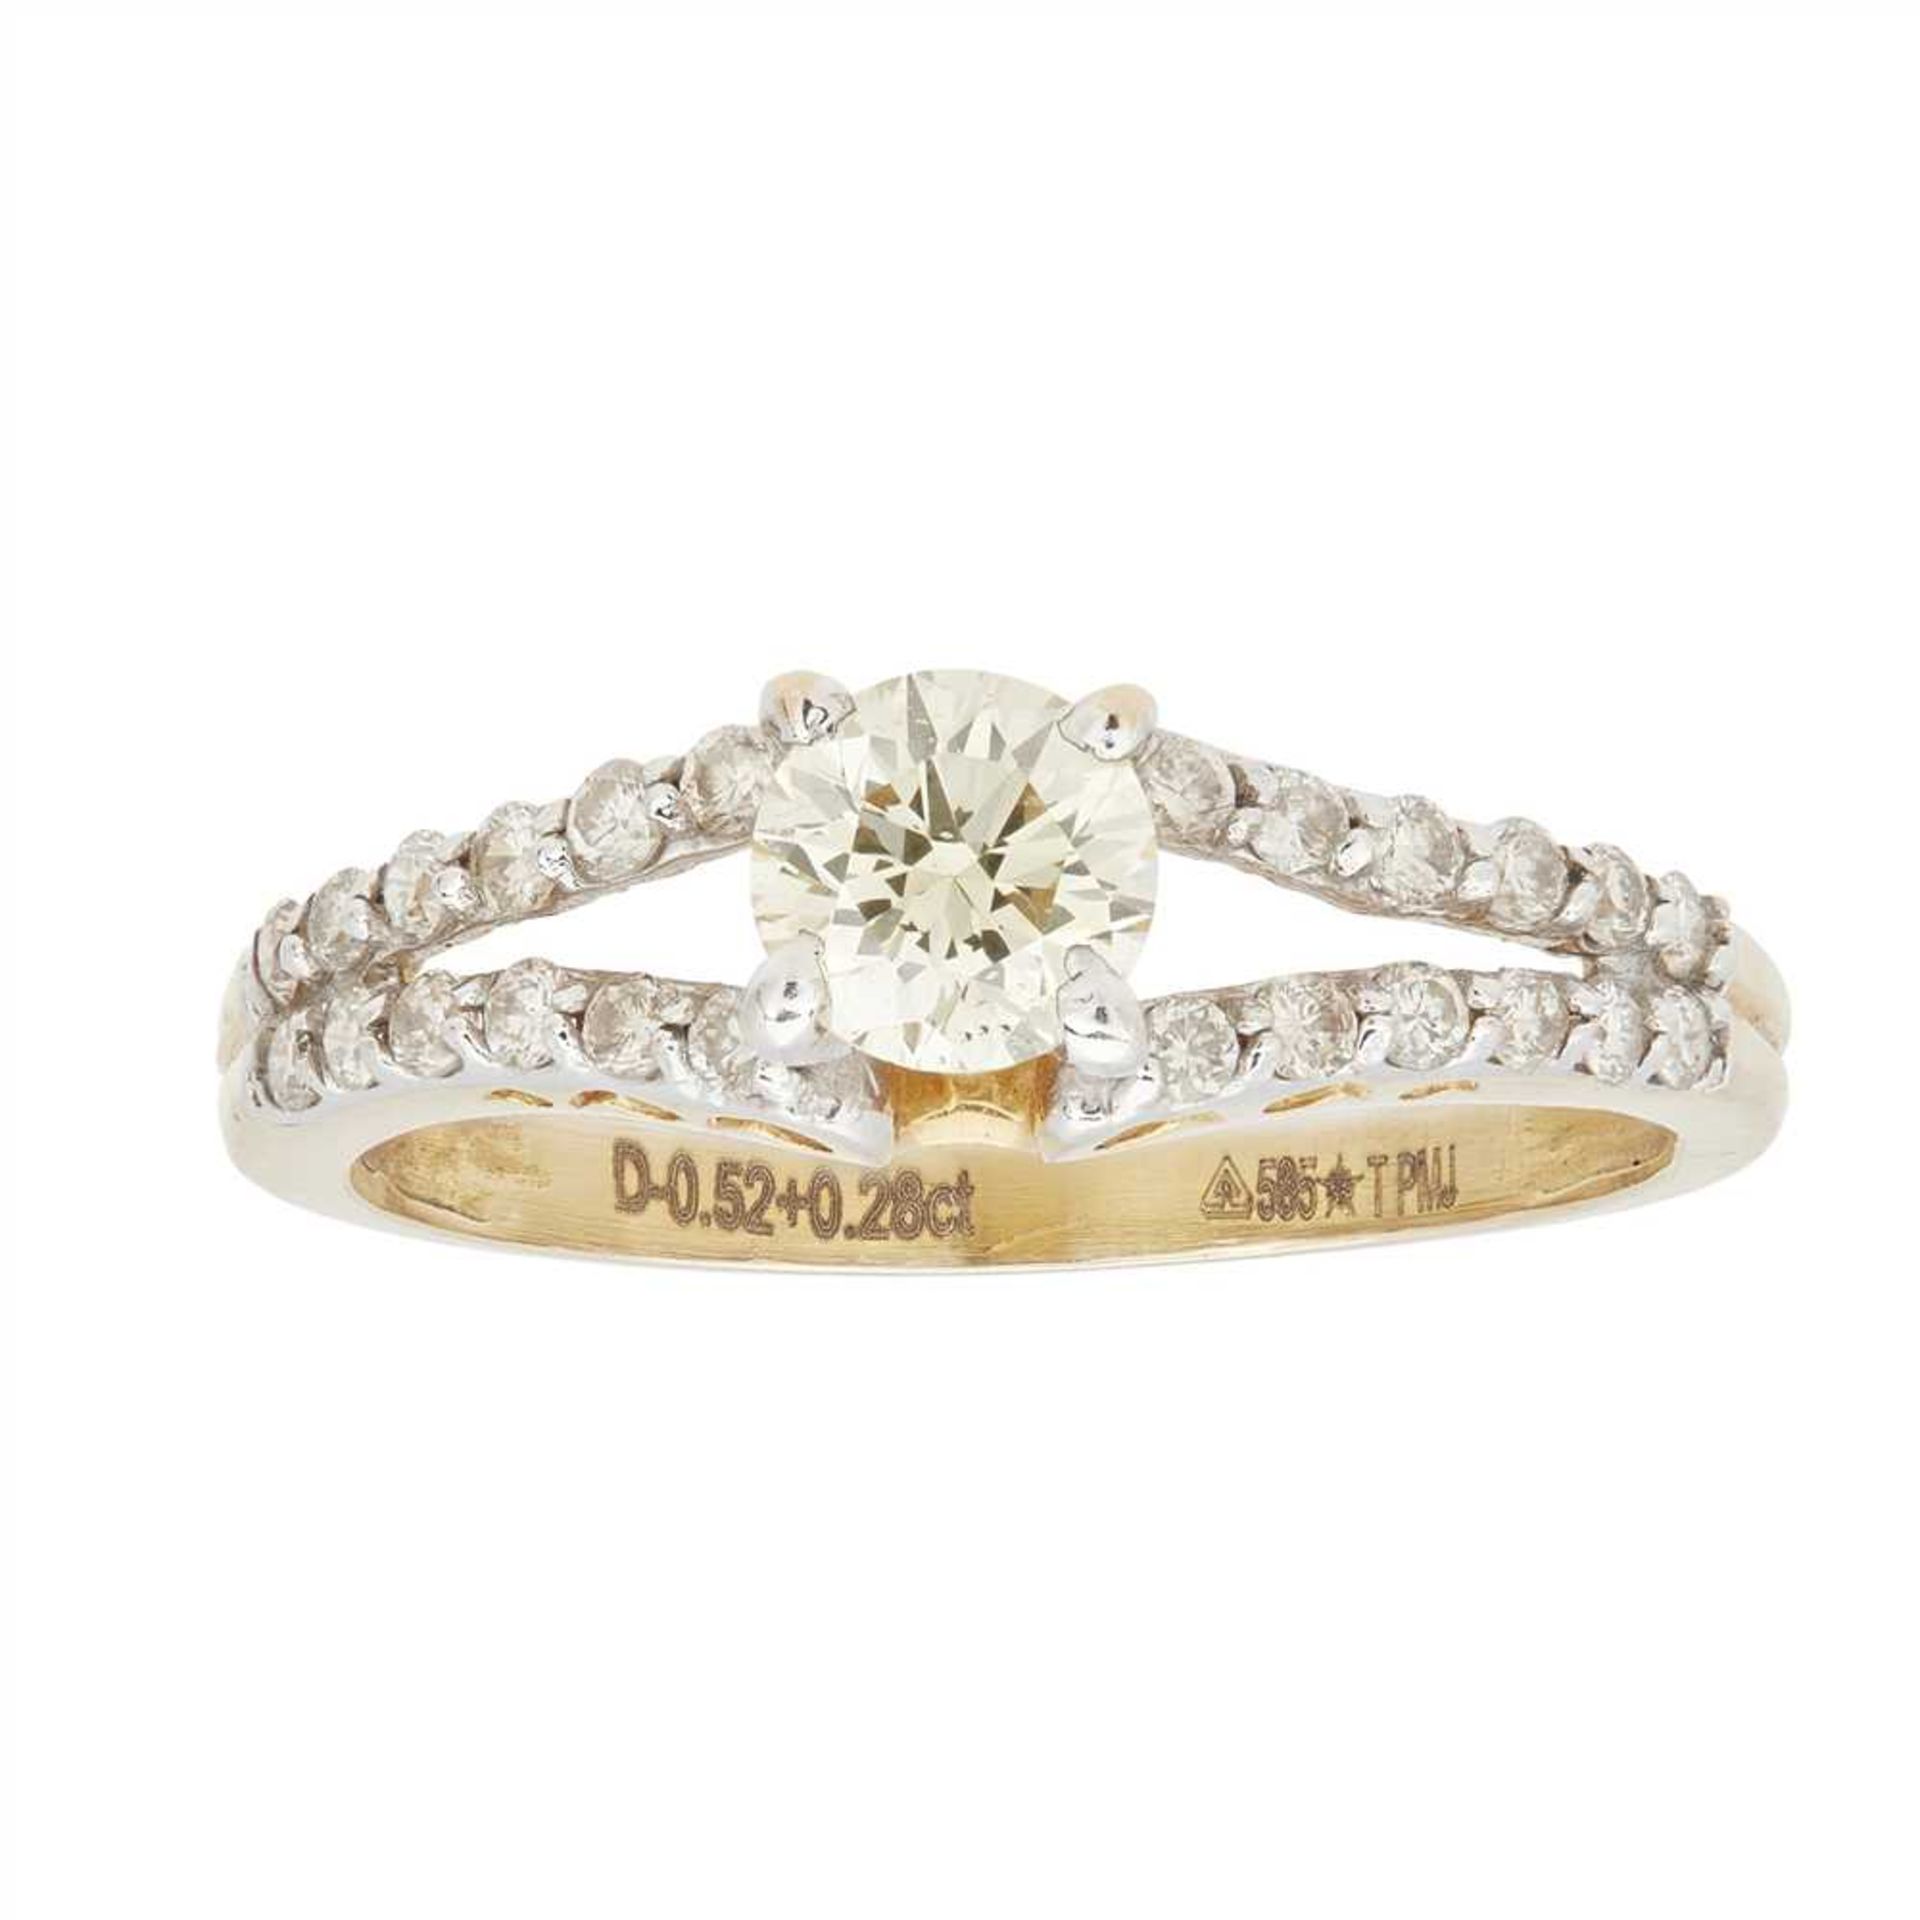 A yellow diamond and colourless diamond ring